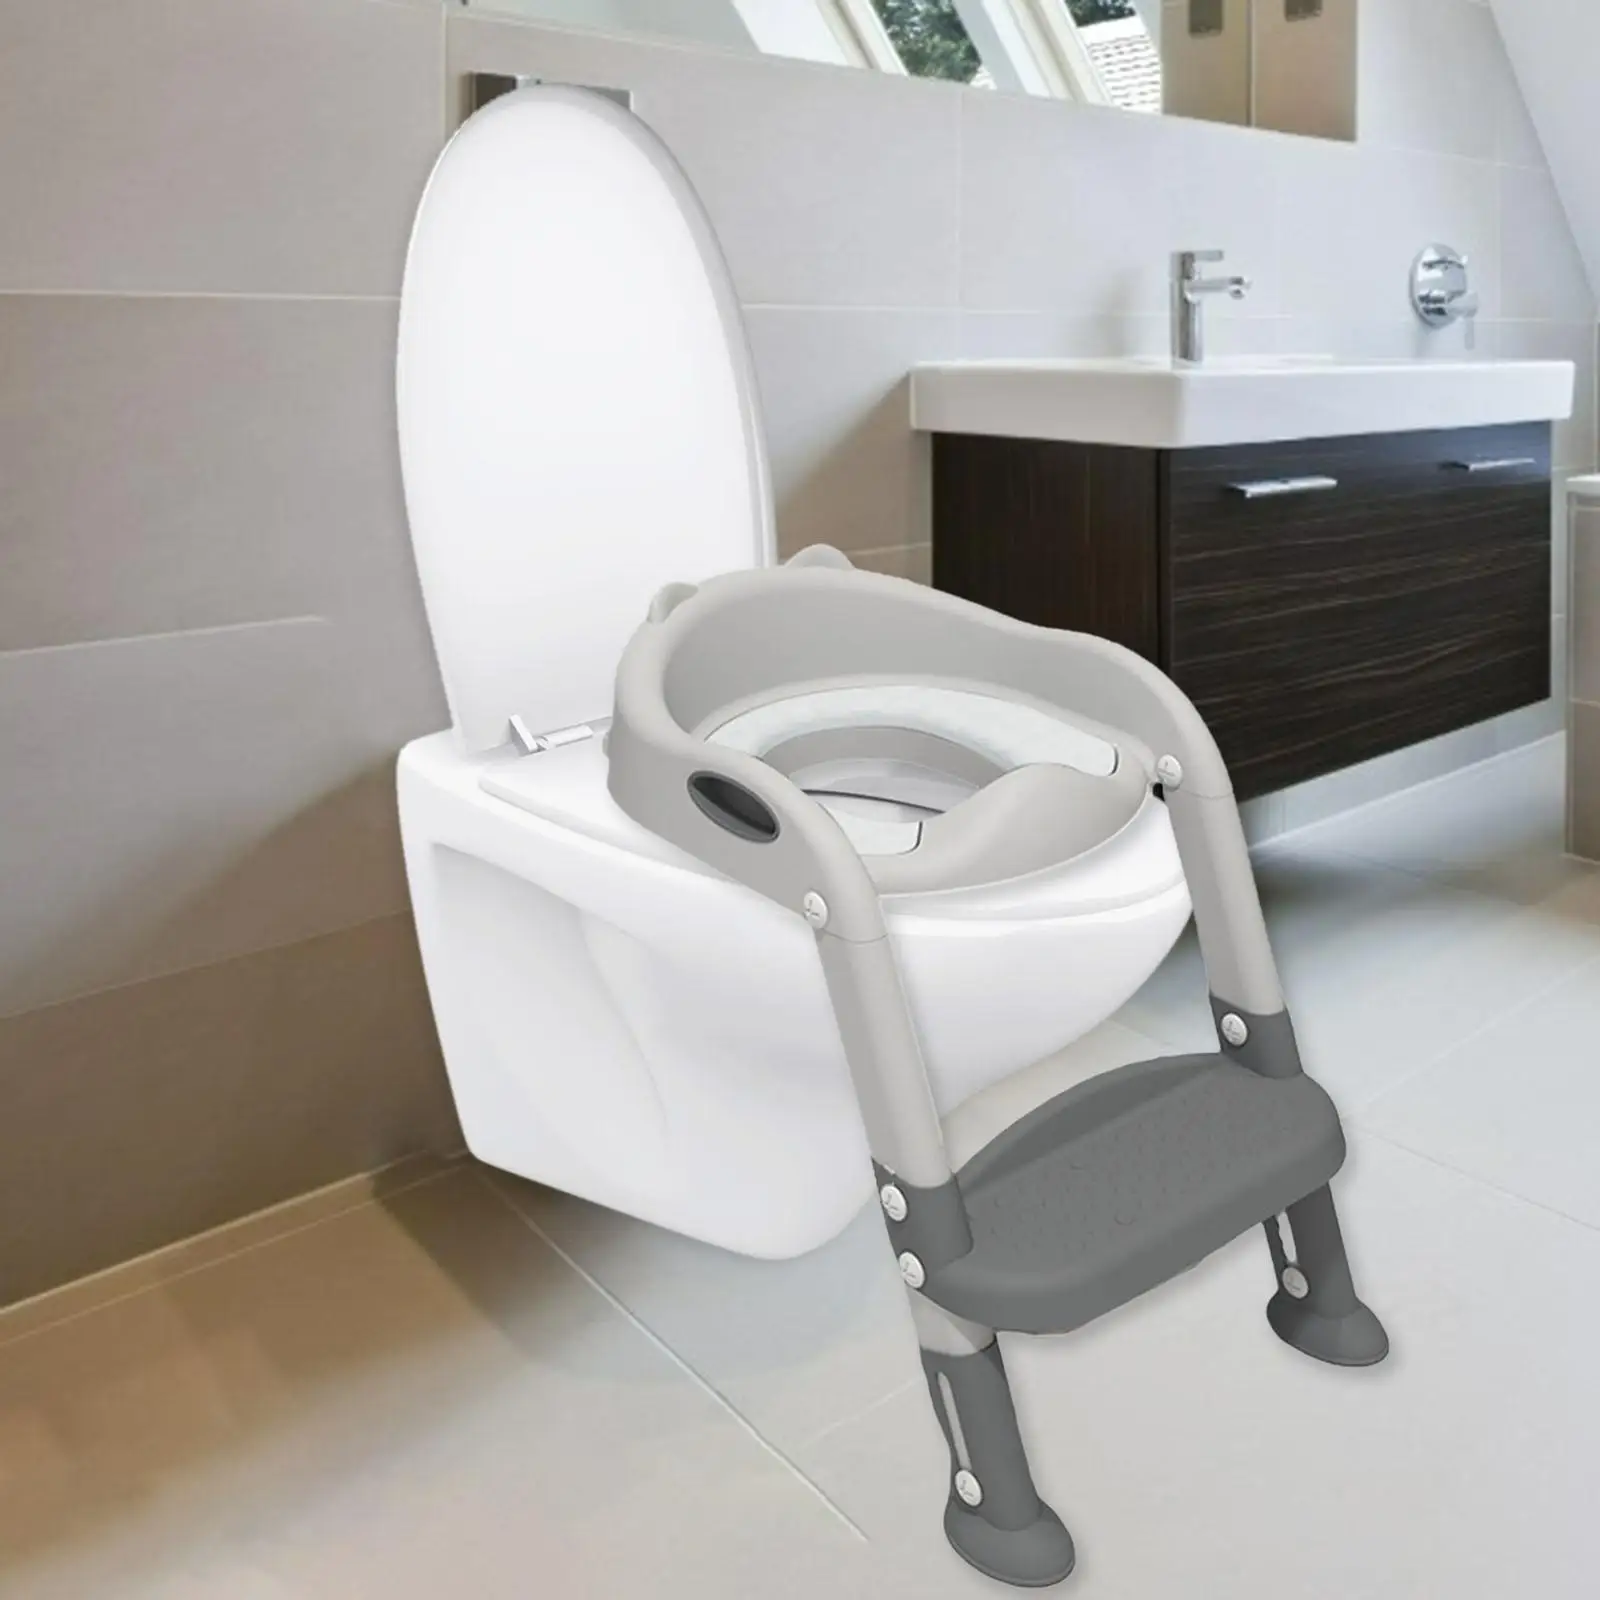 Children Toilet Seat Nonslip Soft Cushion with Handle for Children Kids Baby